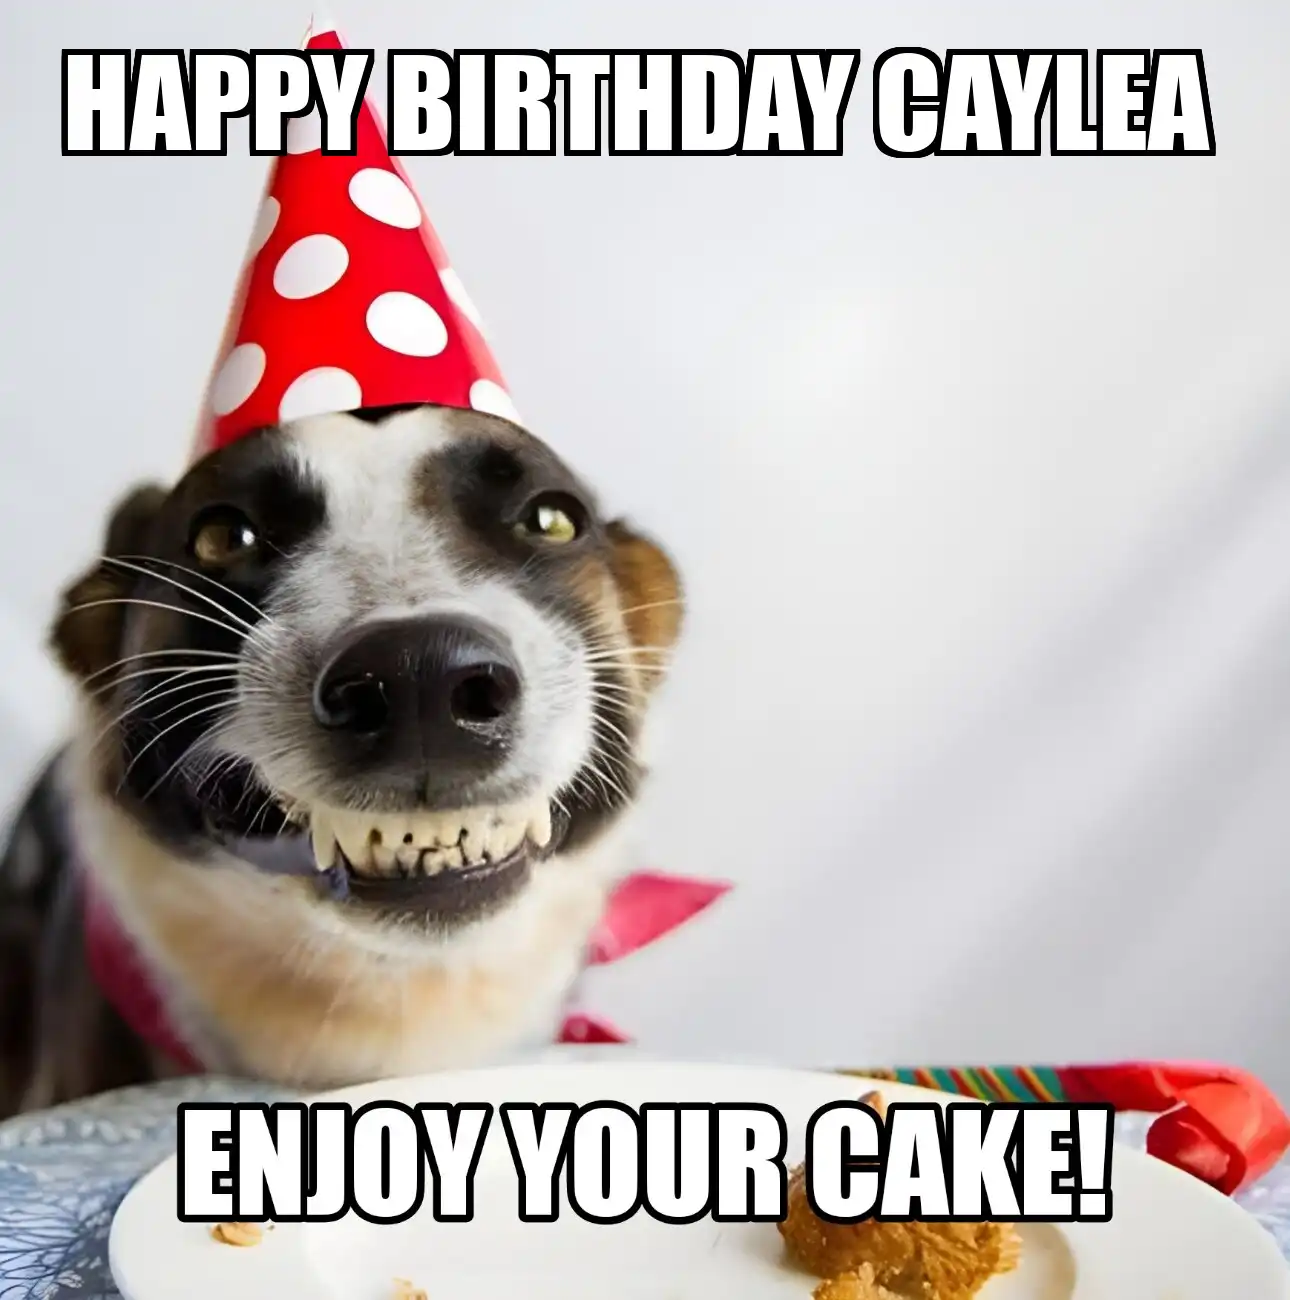 Happy Birthday Caylea Enjoy Your Cake Dog Meme